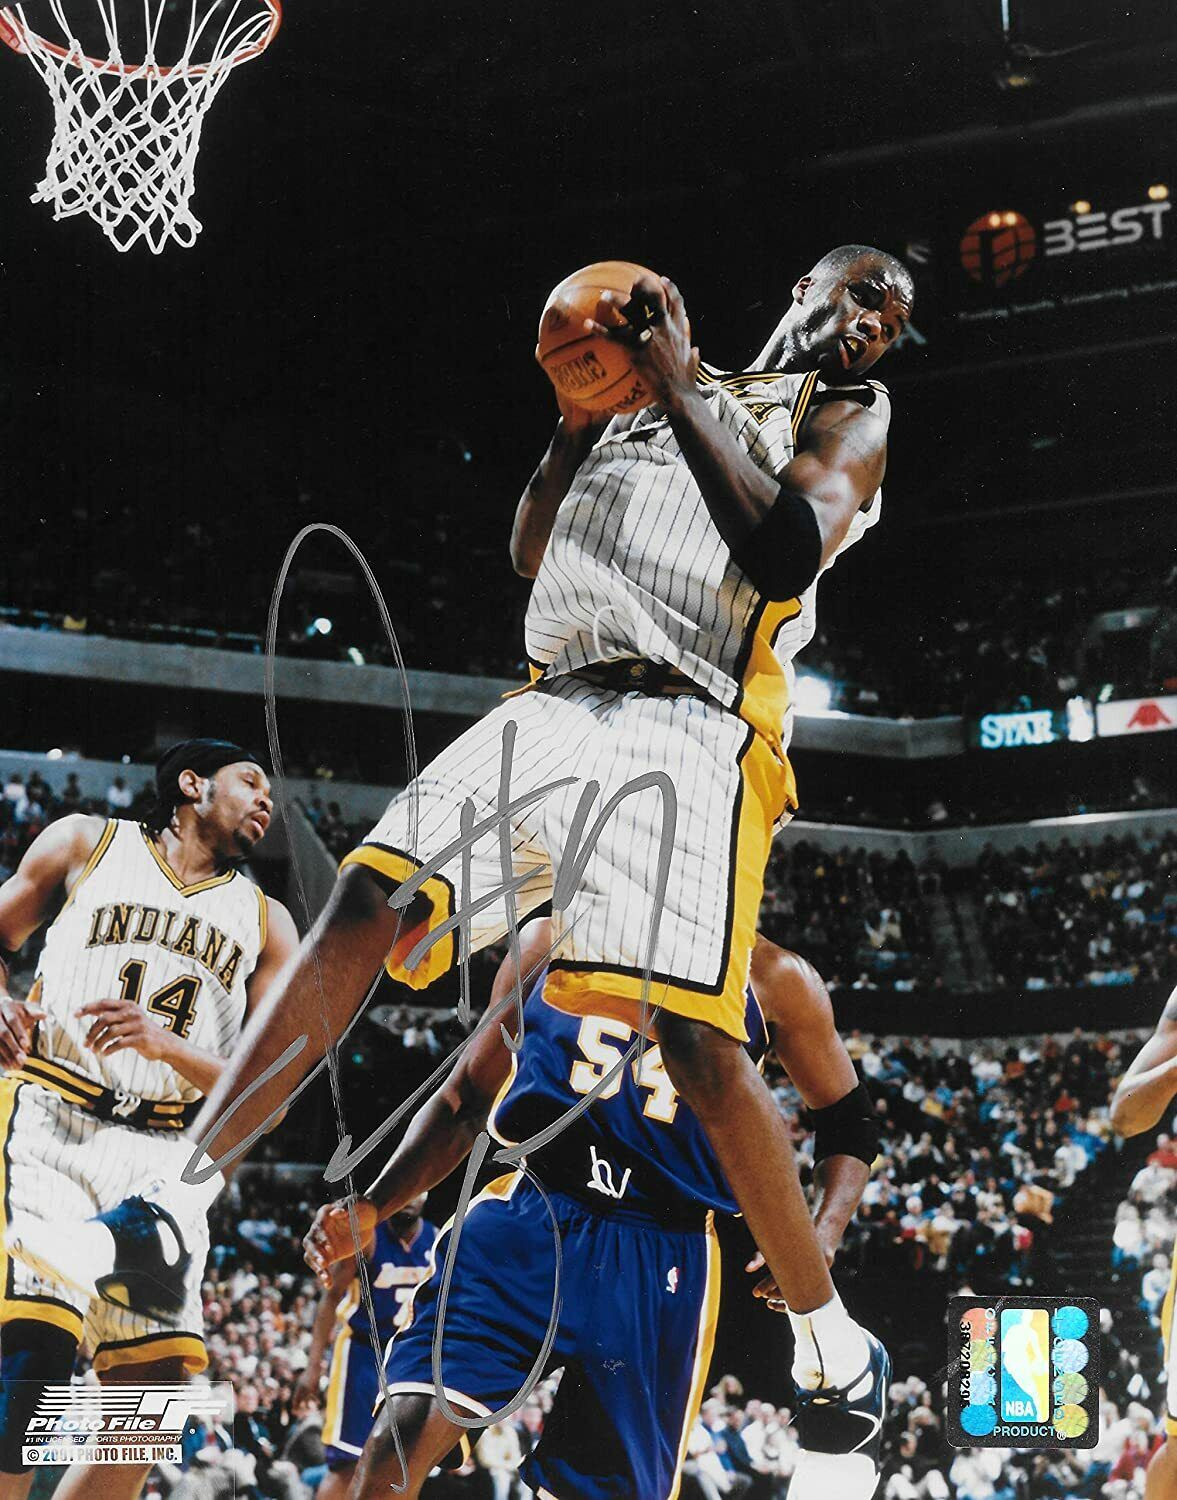 Jermaine Washington Mall O'Neal autographed Indiana photo basketball Popular brand 8x10 Pacers